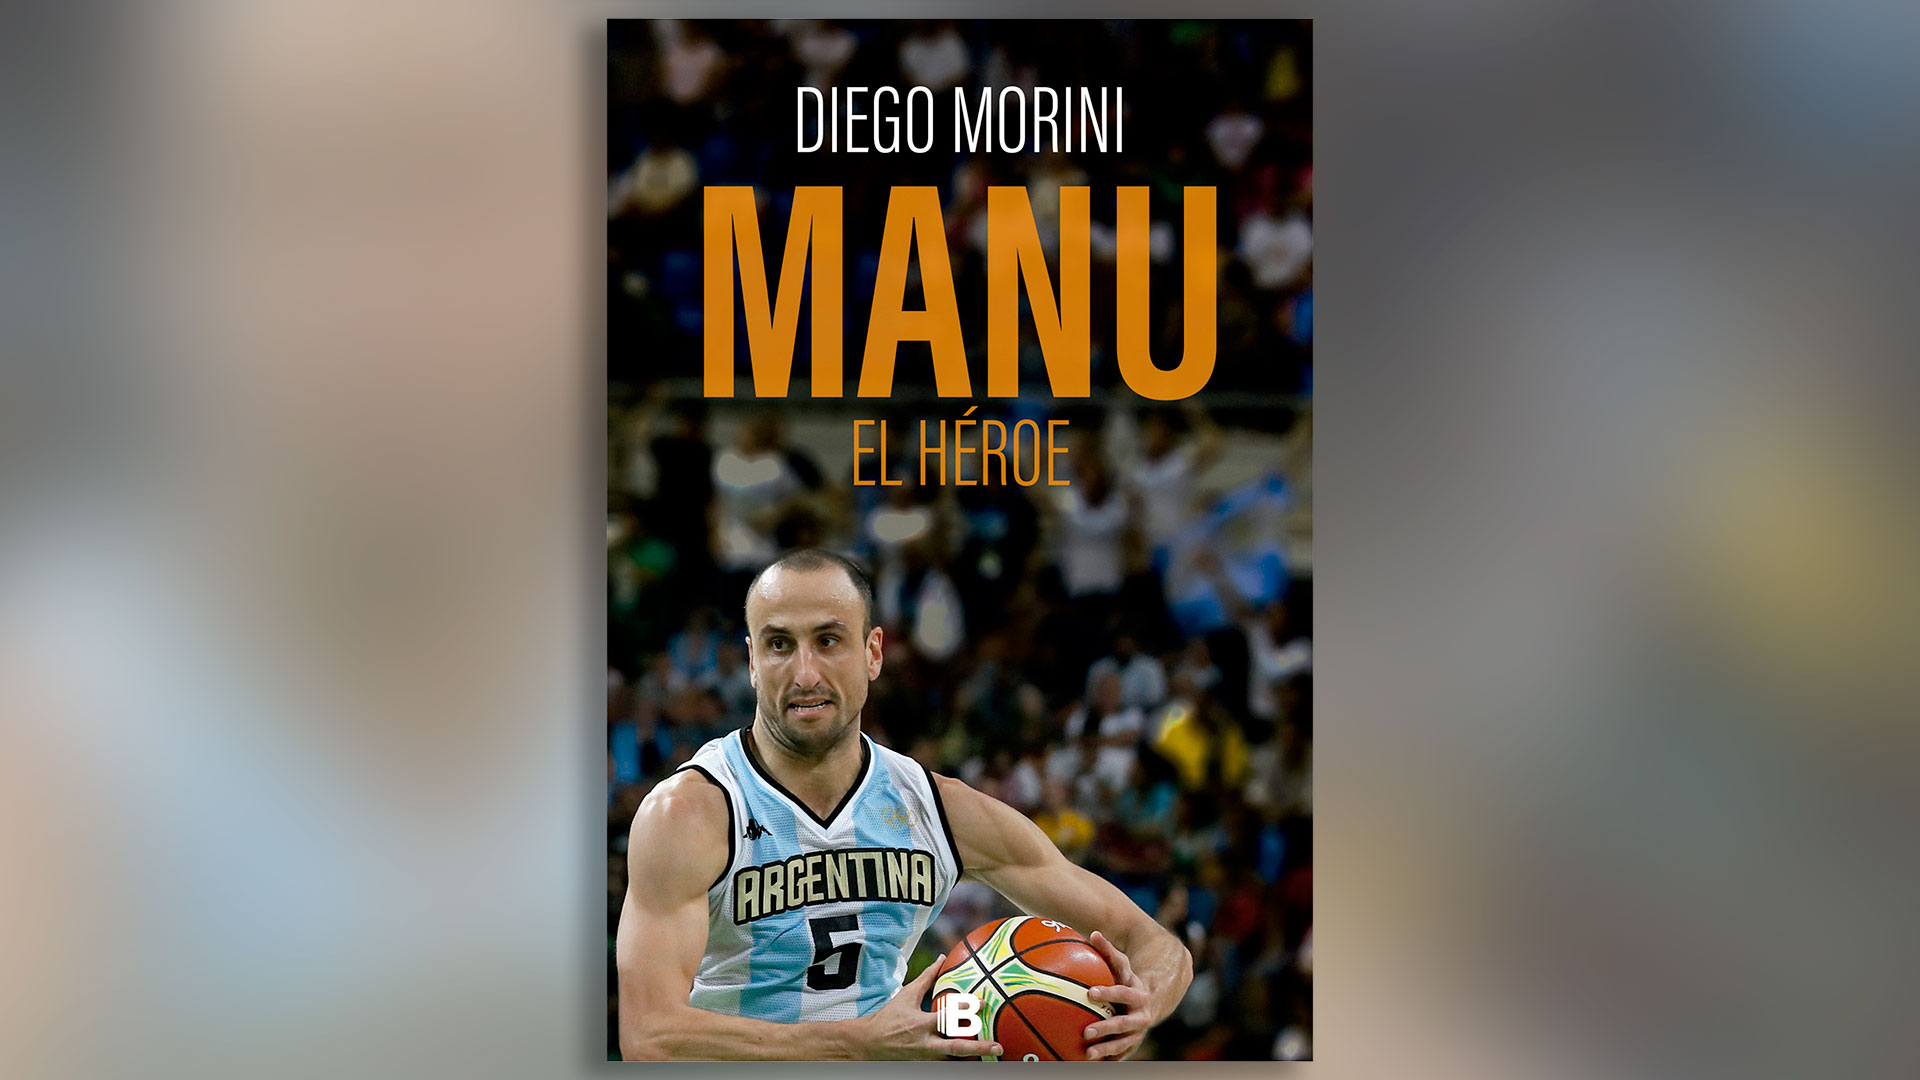 Manu.  The hero, by Diego Morini.